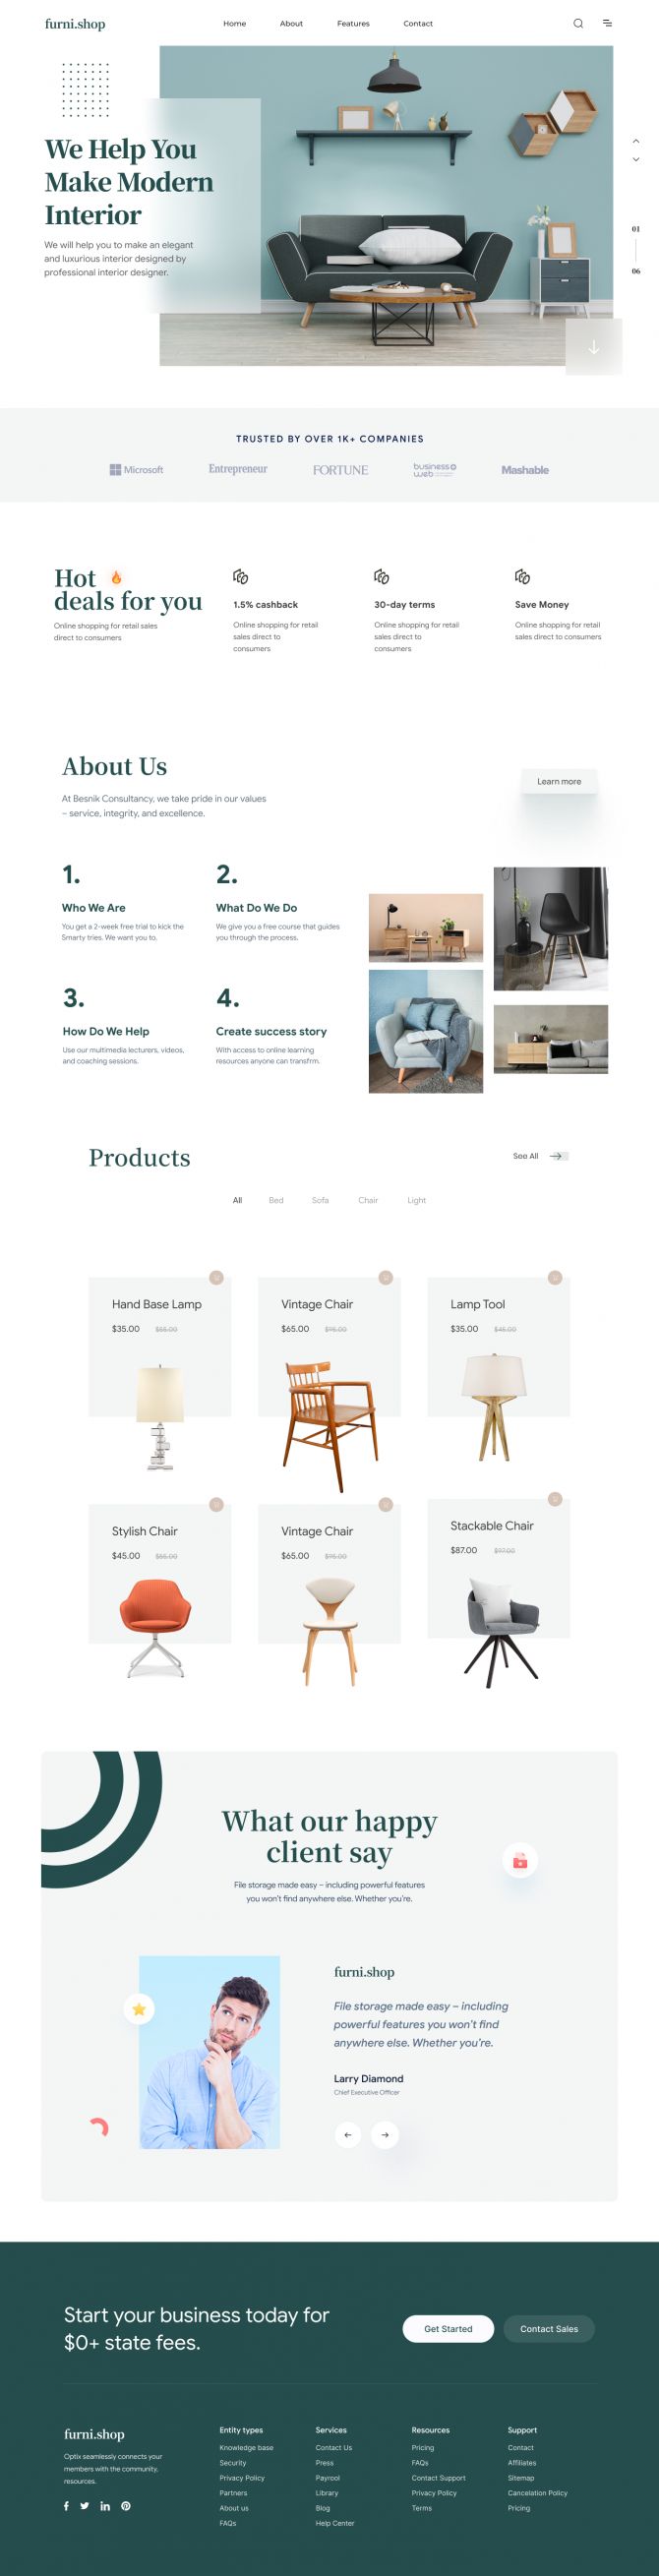 Furniture Company Landing Page Website Design